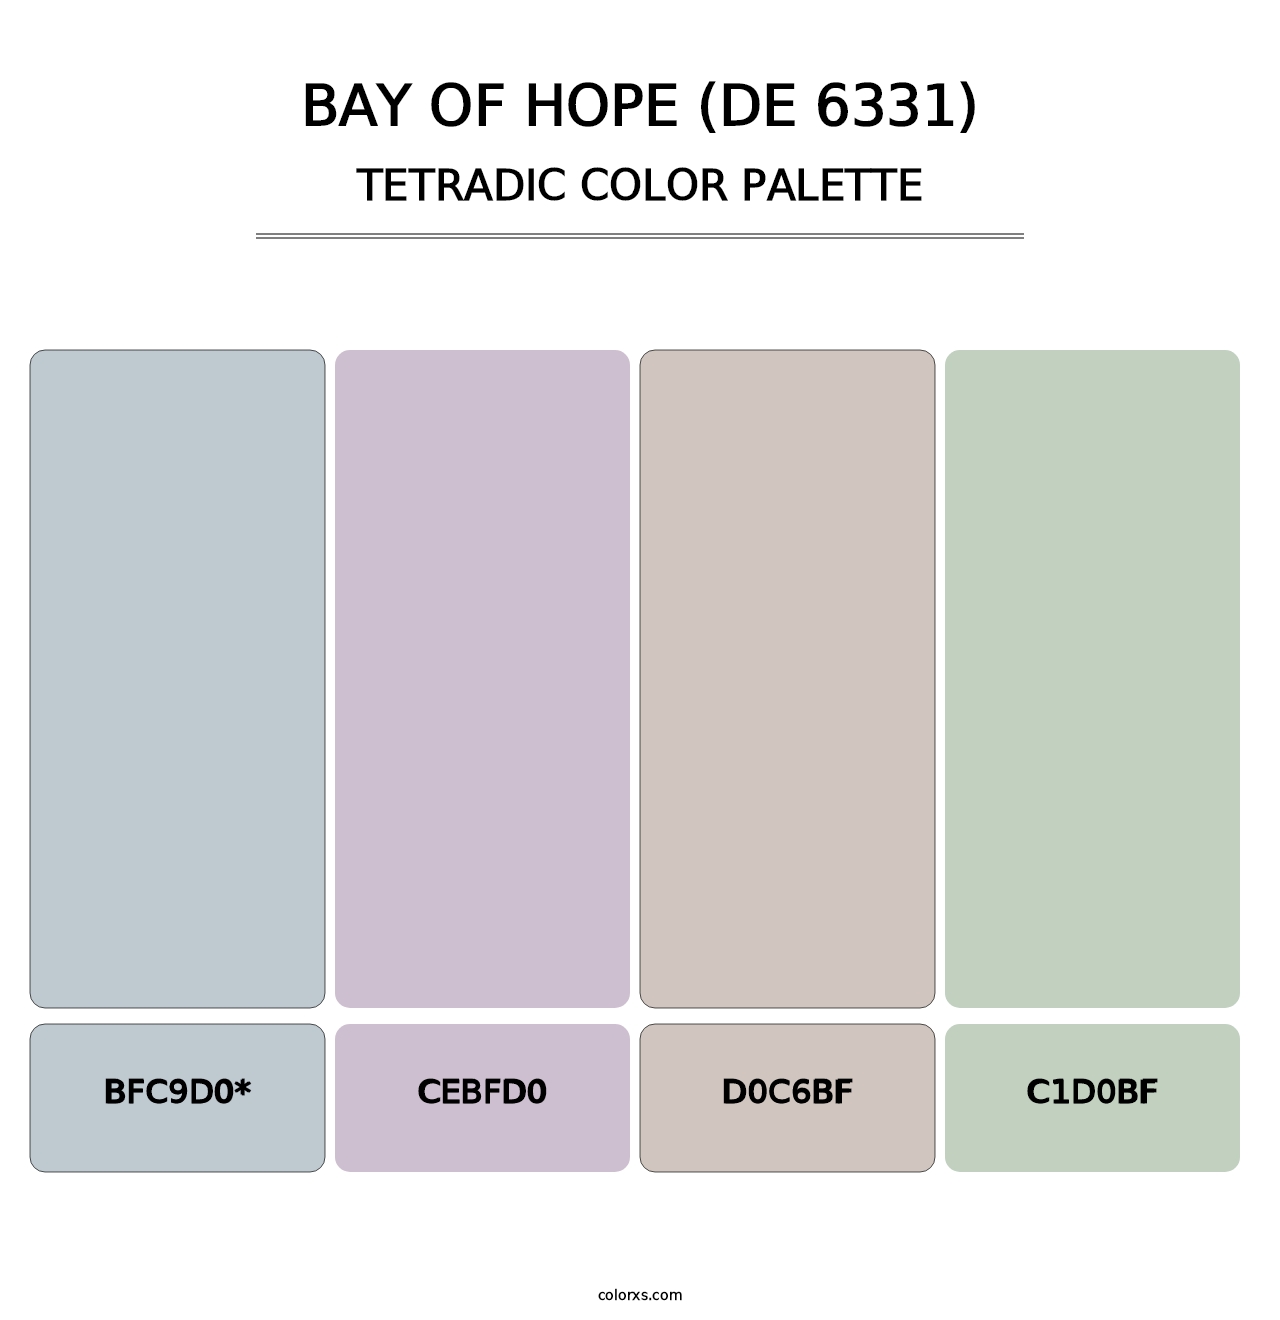 Bay of Hope (DE 6331) - Tetradic Color Palette